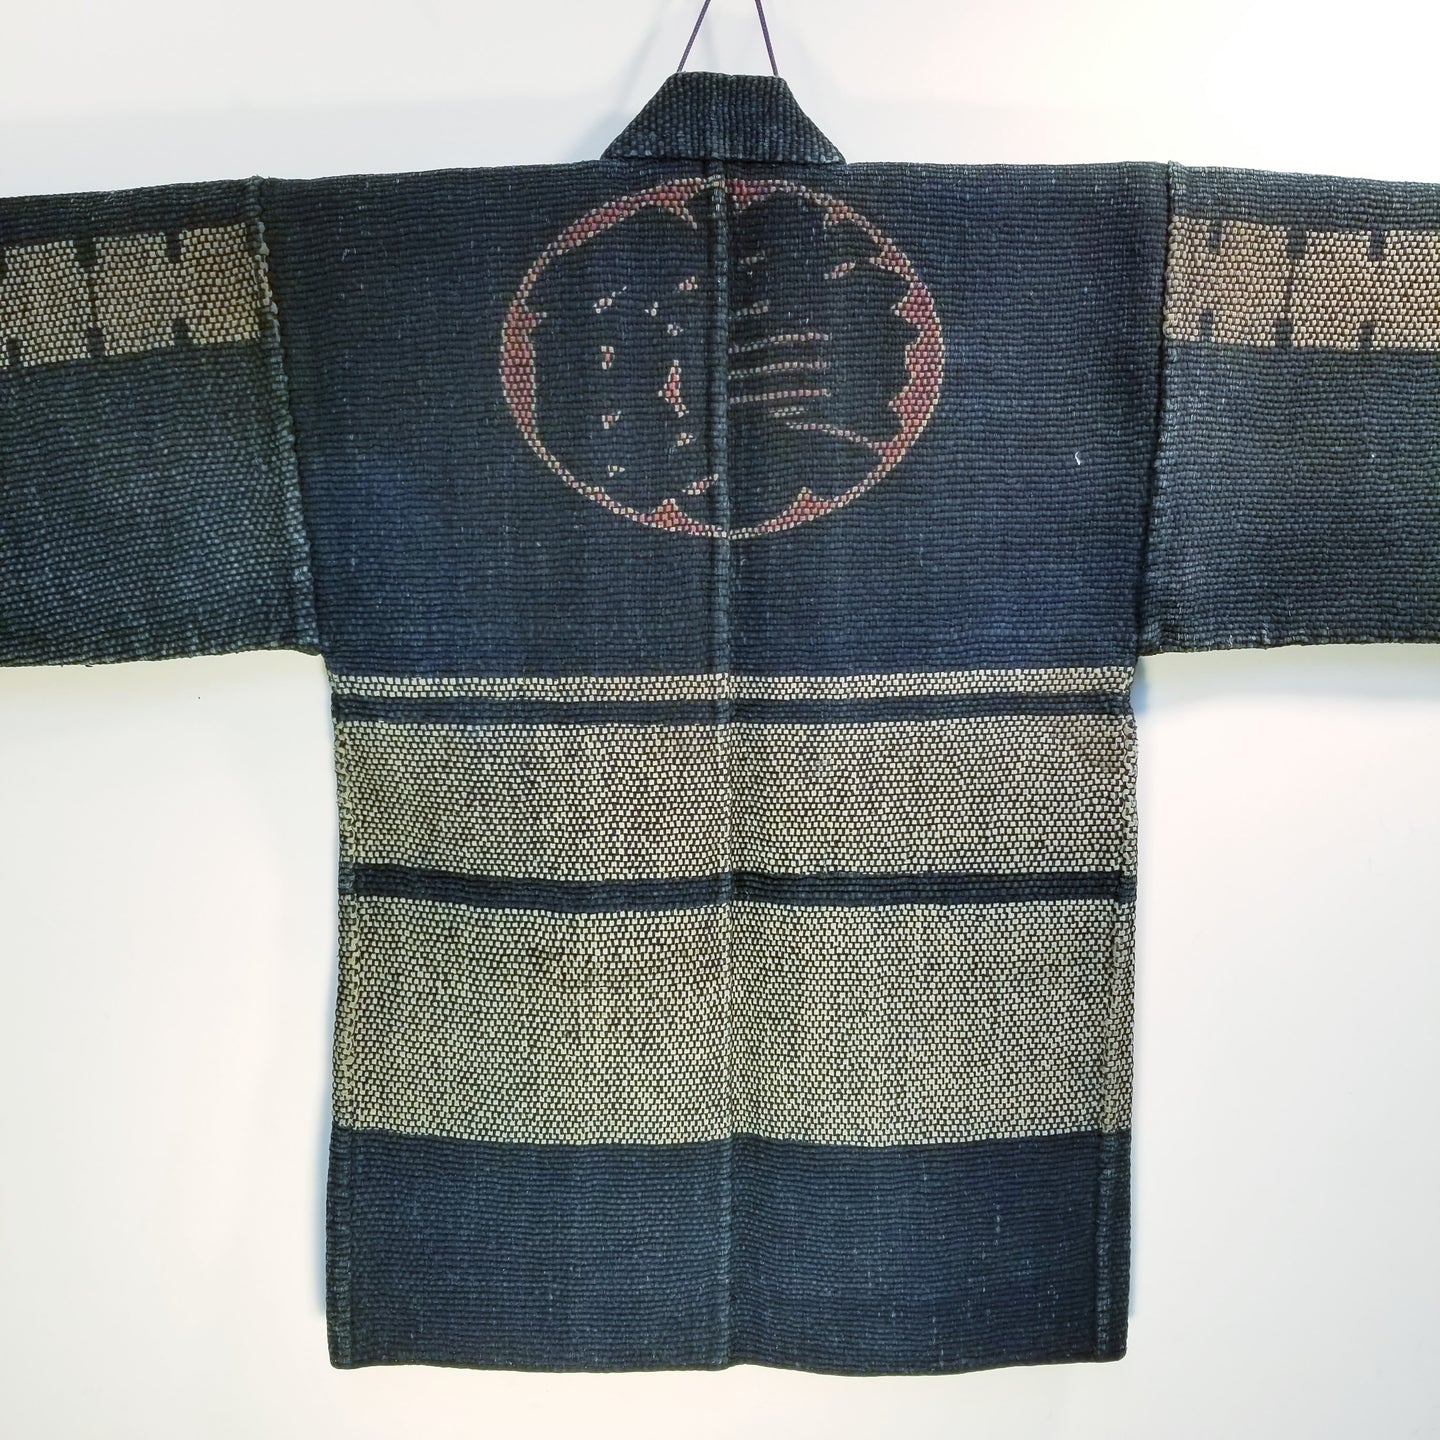 Taisho Era Japanese Sashiko Fireman's Jacket